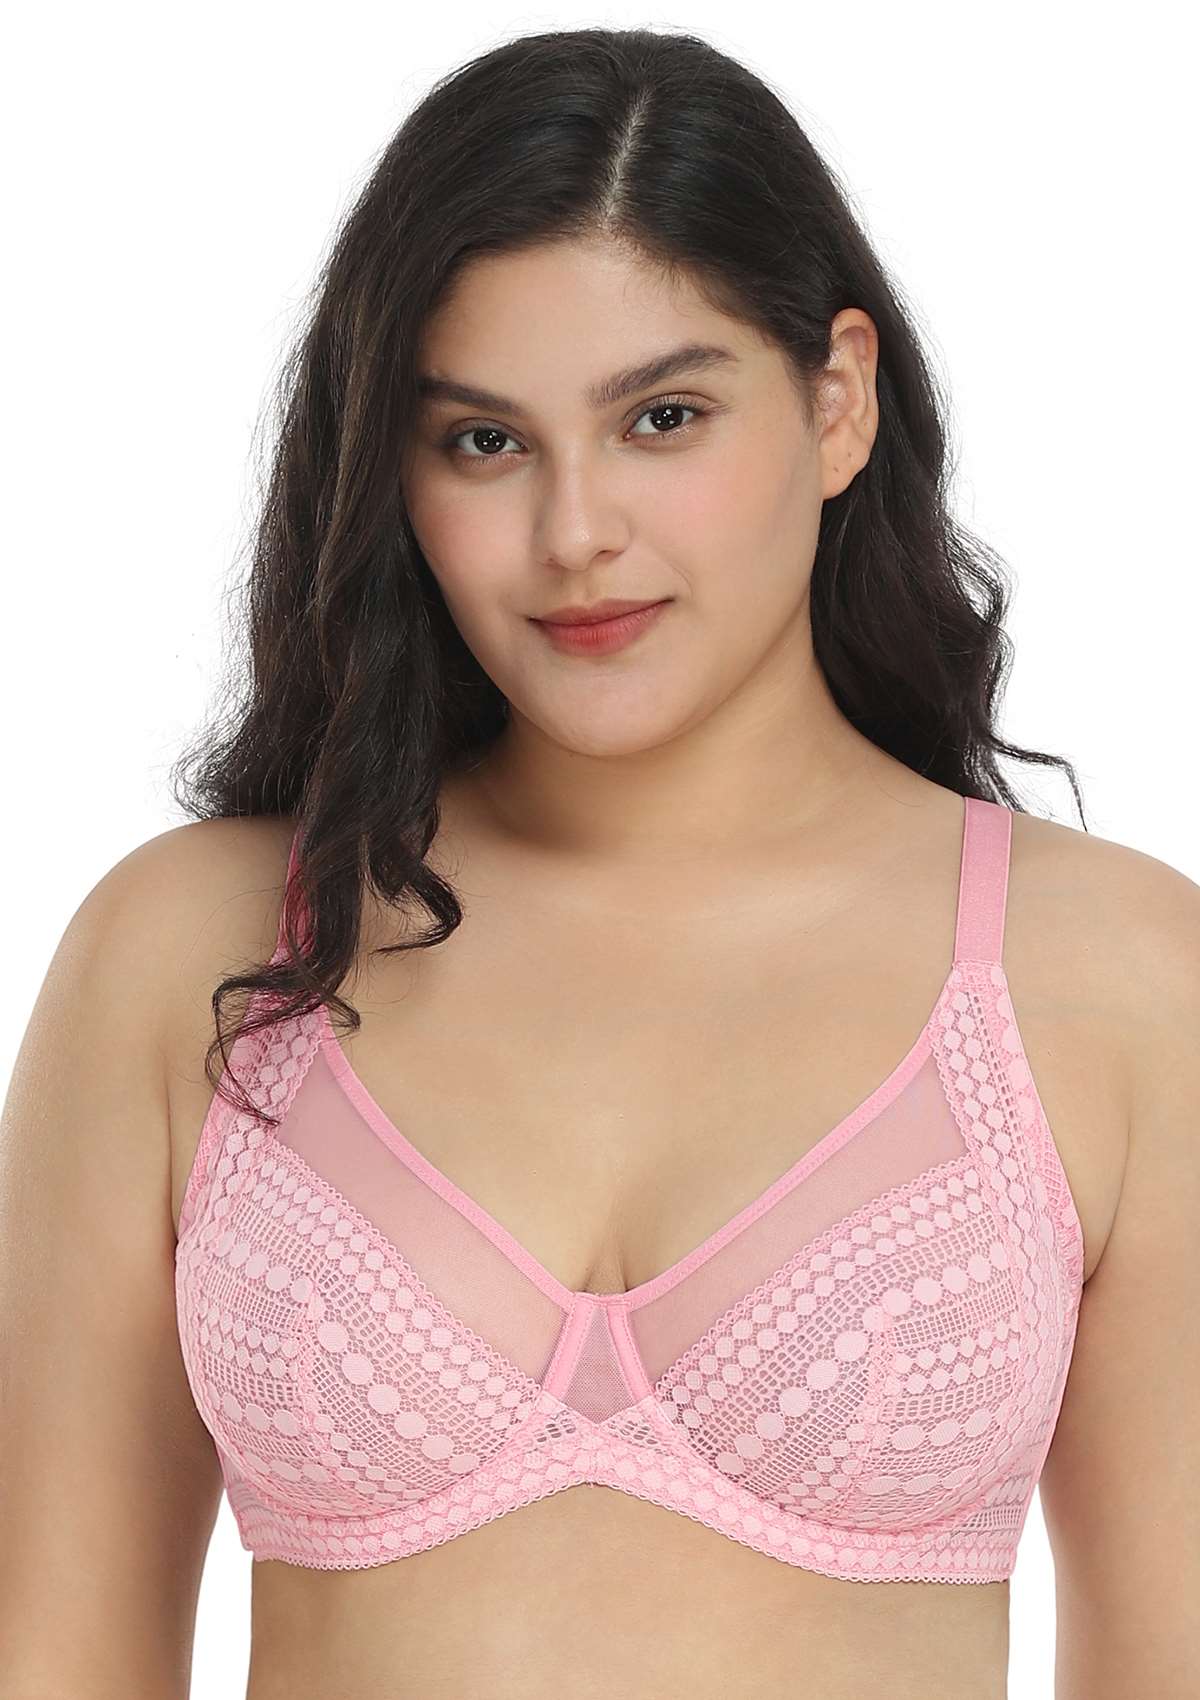 HSIA Heroine Lace Unlined Bra: Bra That Hides Back Fat - Plus Size - Pink / 36 / D